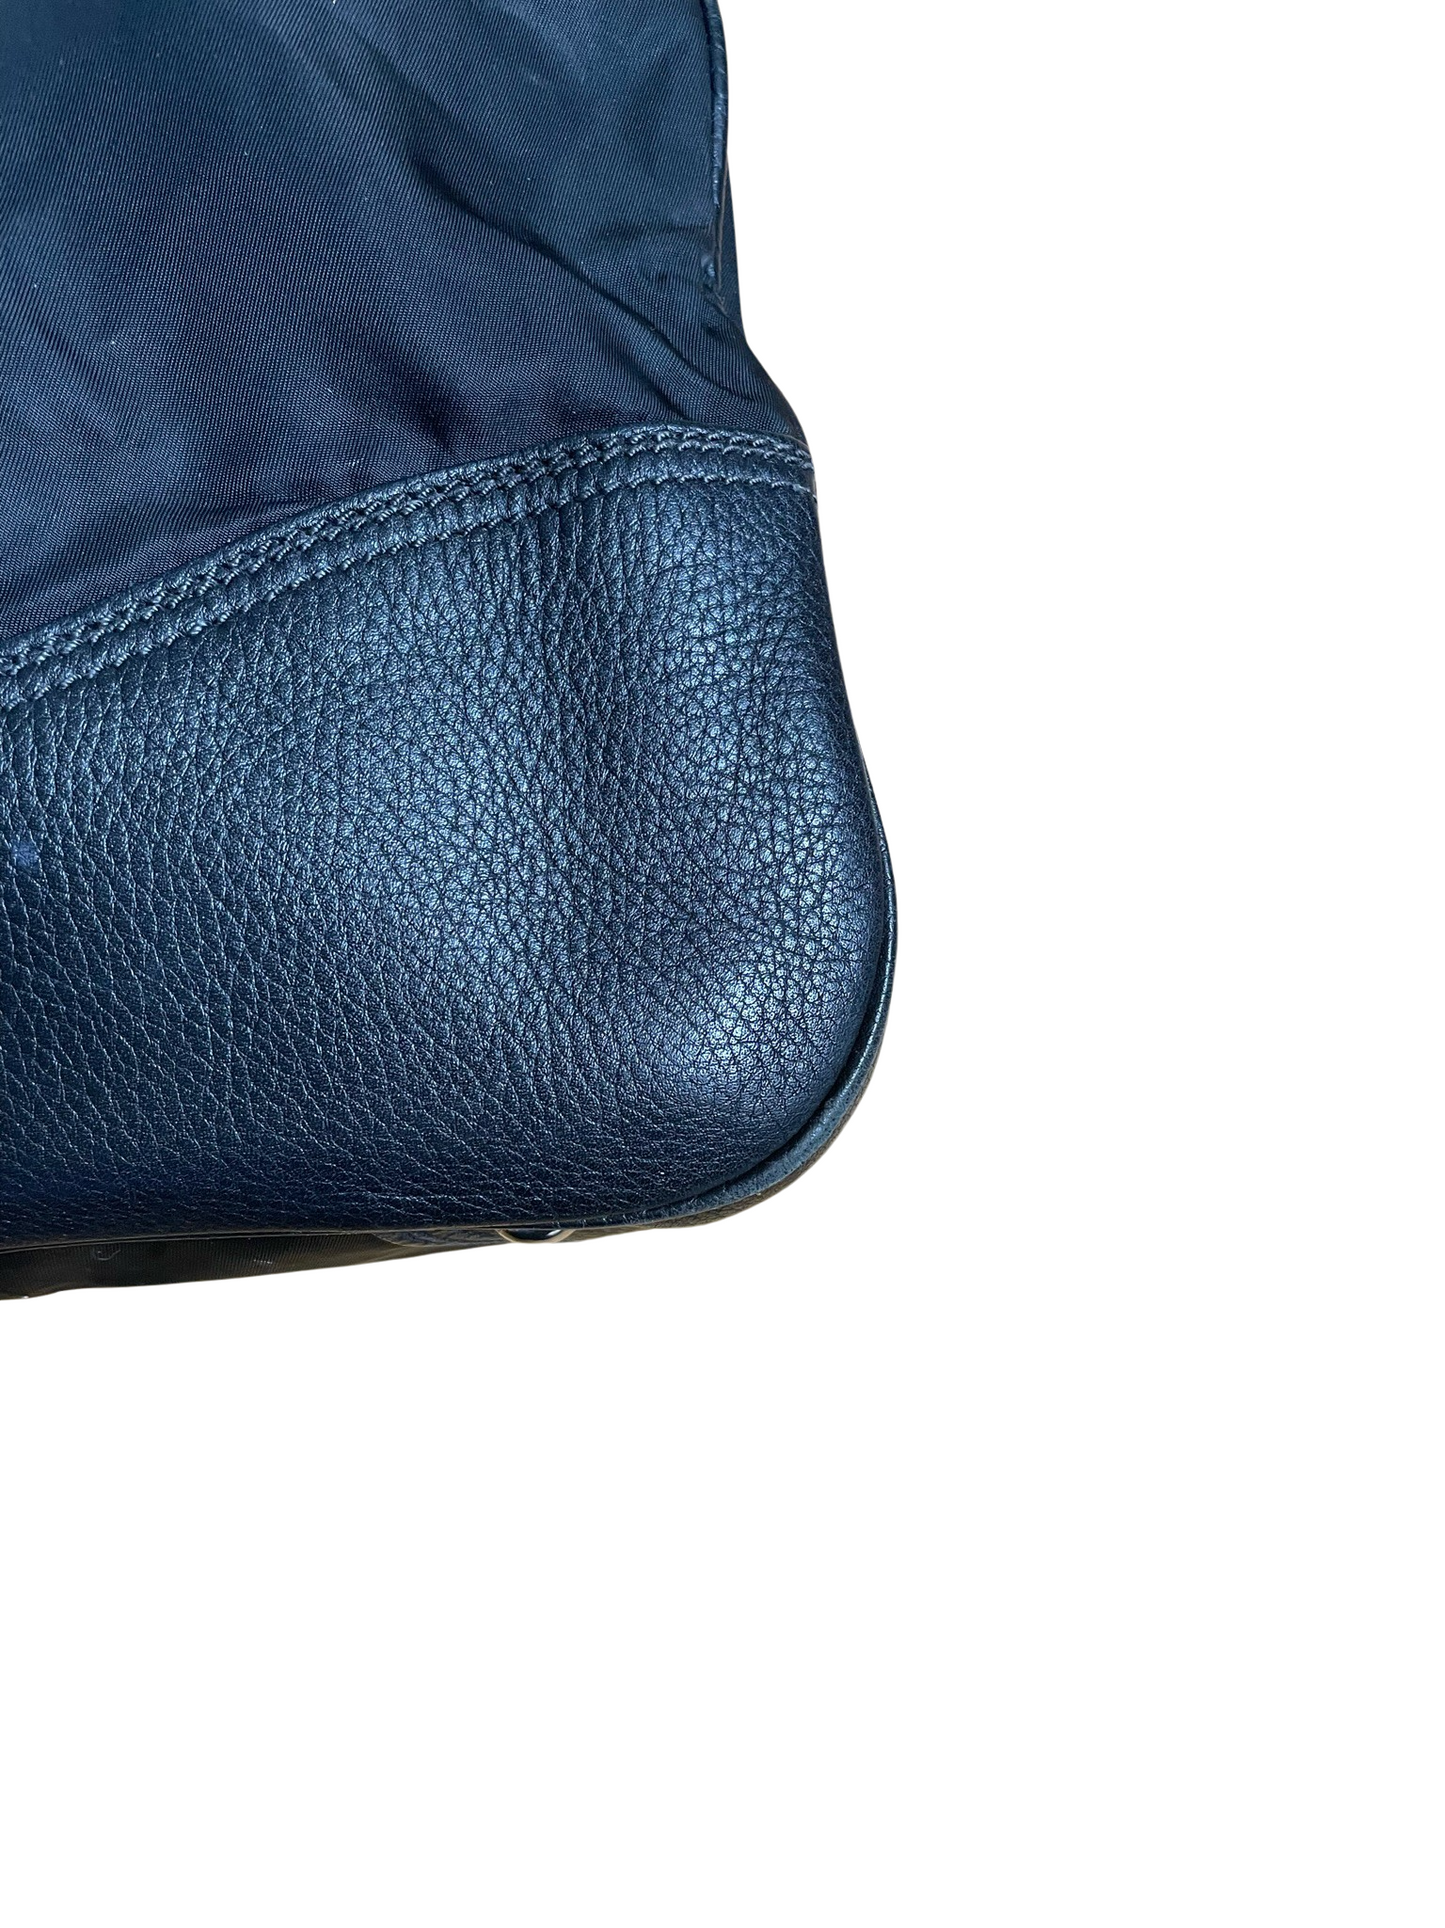 Prada Black Nylon & Leather Handbag